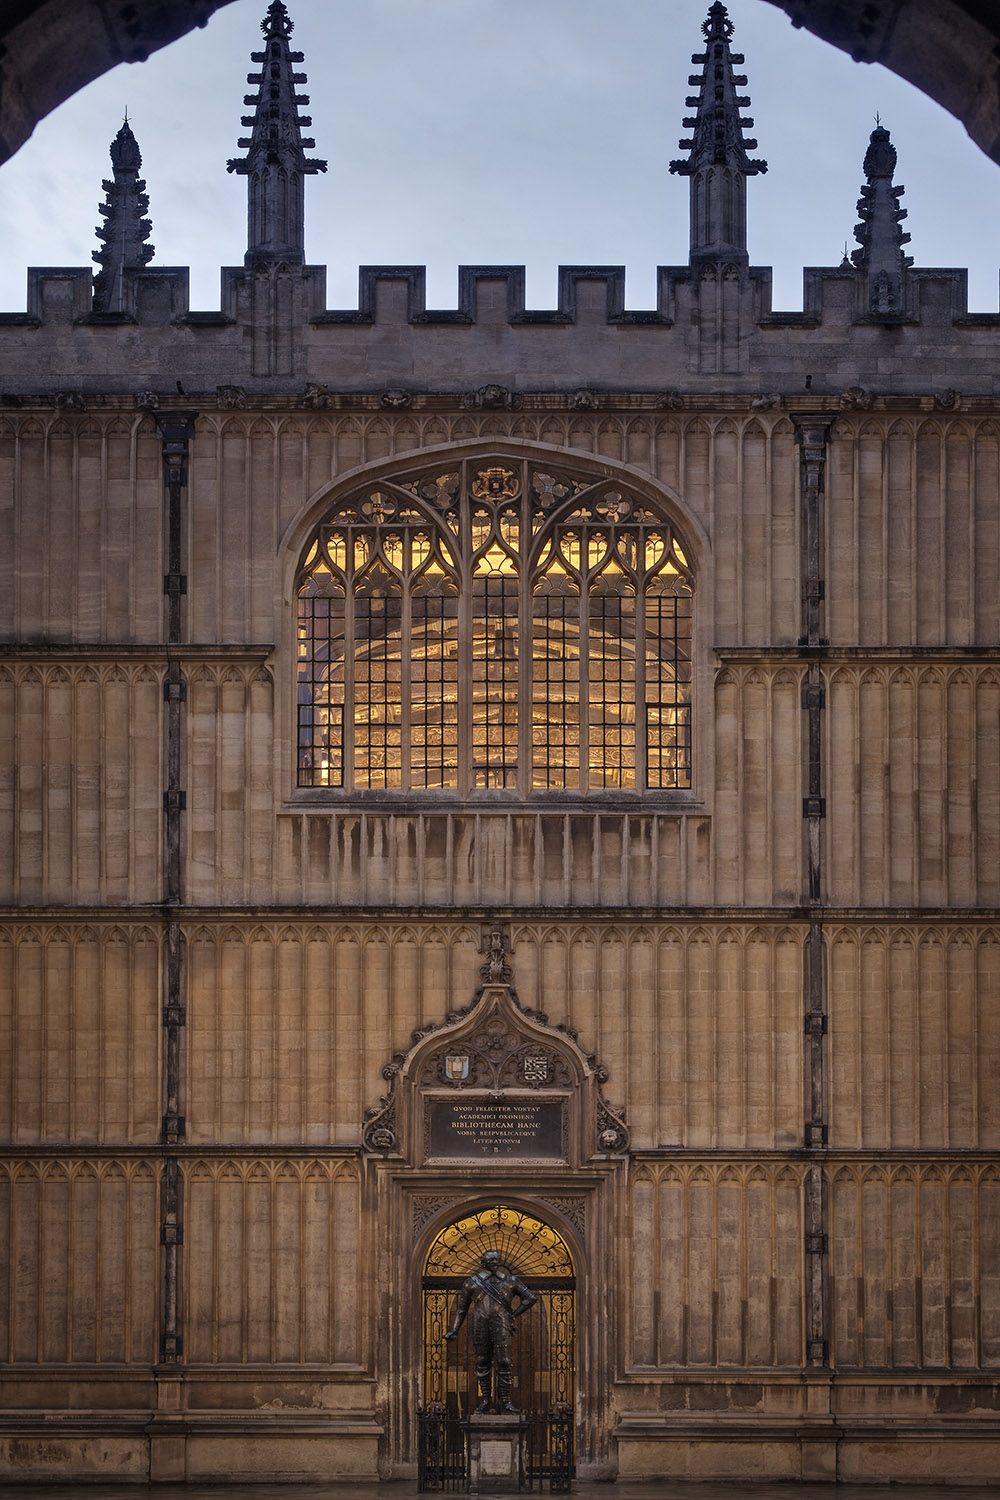 Duke Humfrey's Library, Bodleian Library, University of Oxford, Oxford, UK